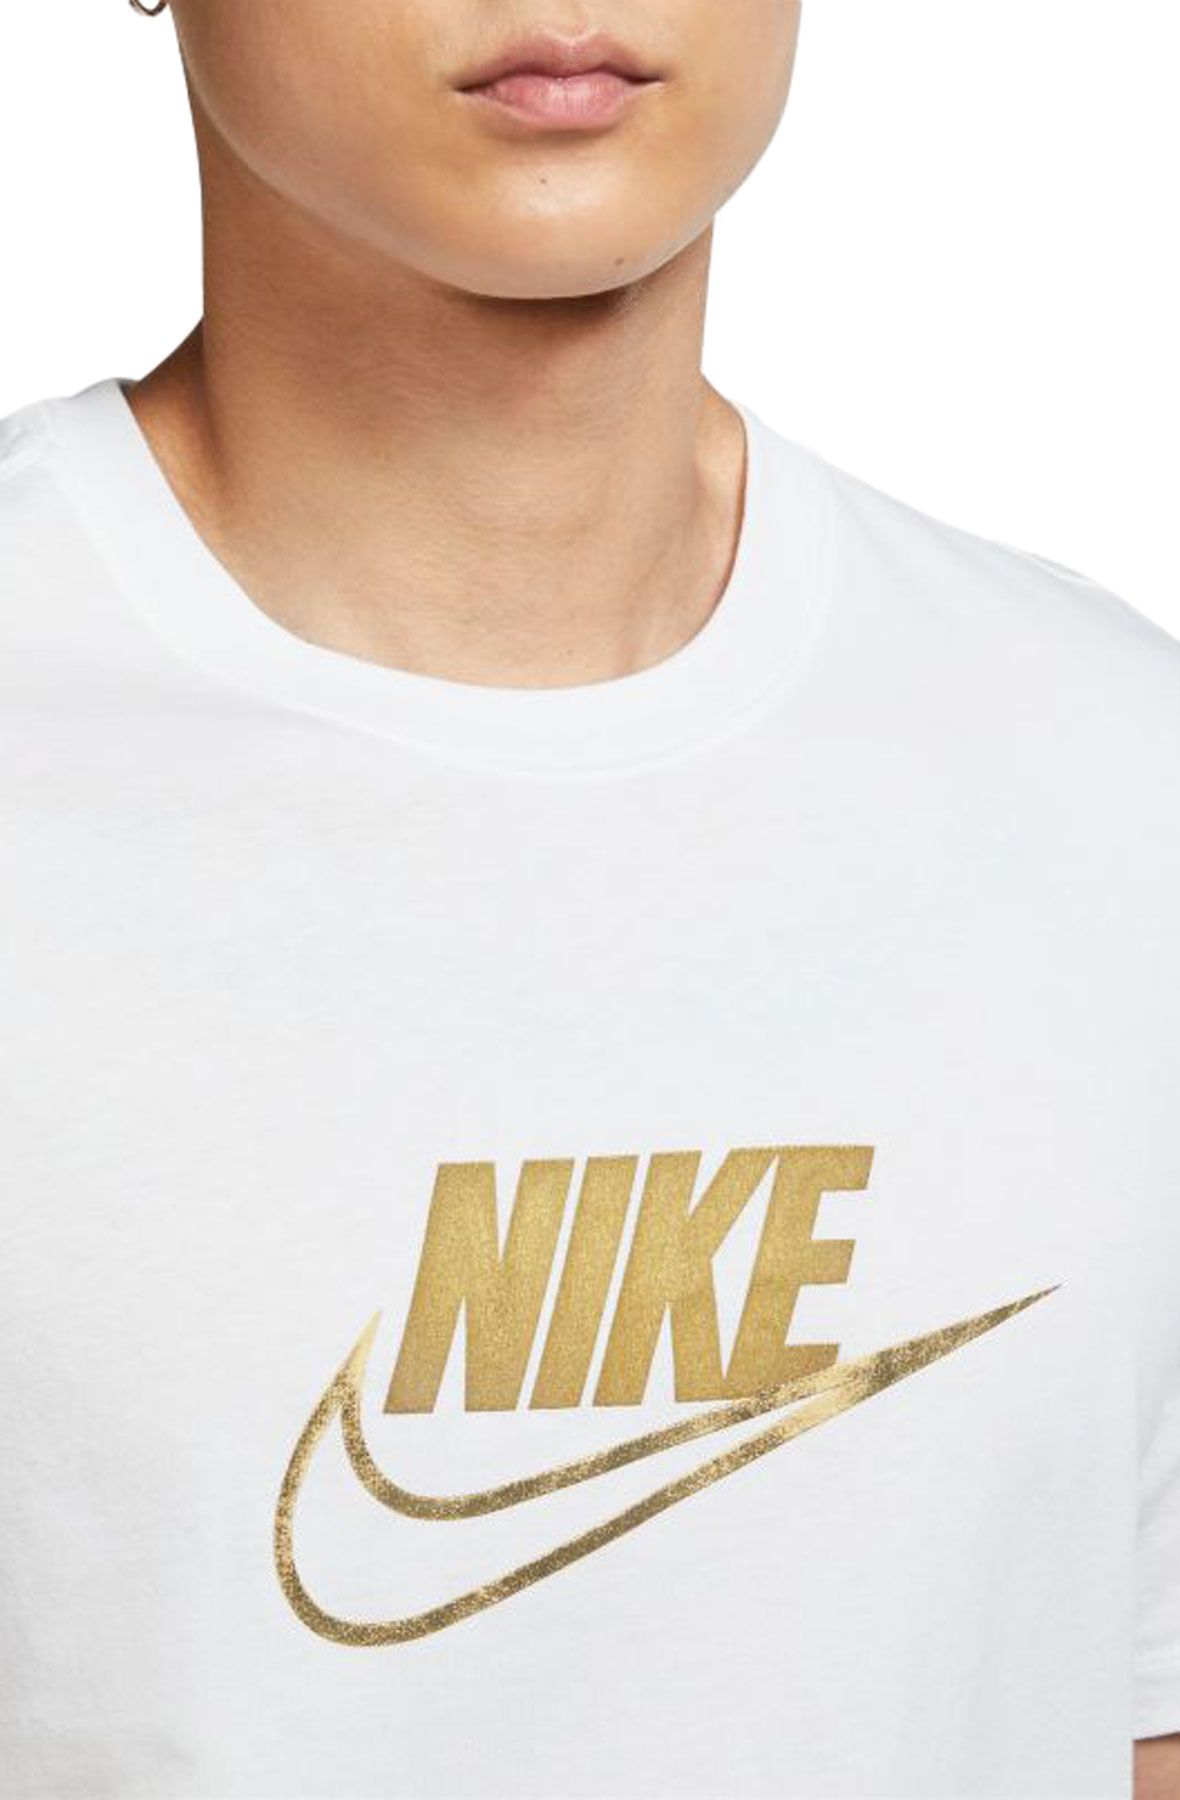 Nike Sportswear Men's Metallic T-Shirt.